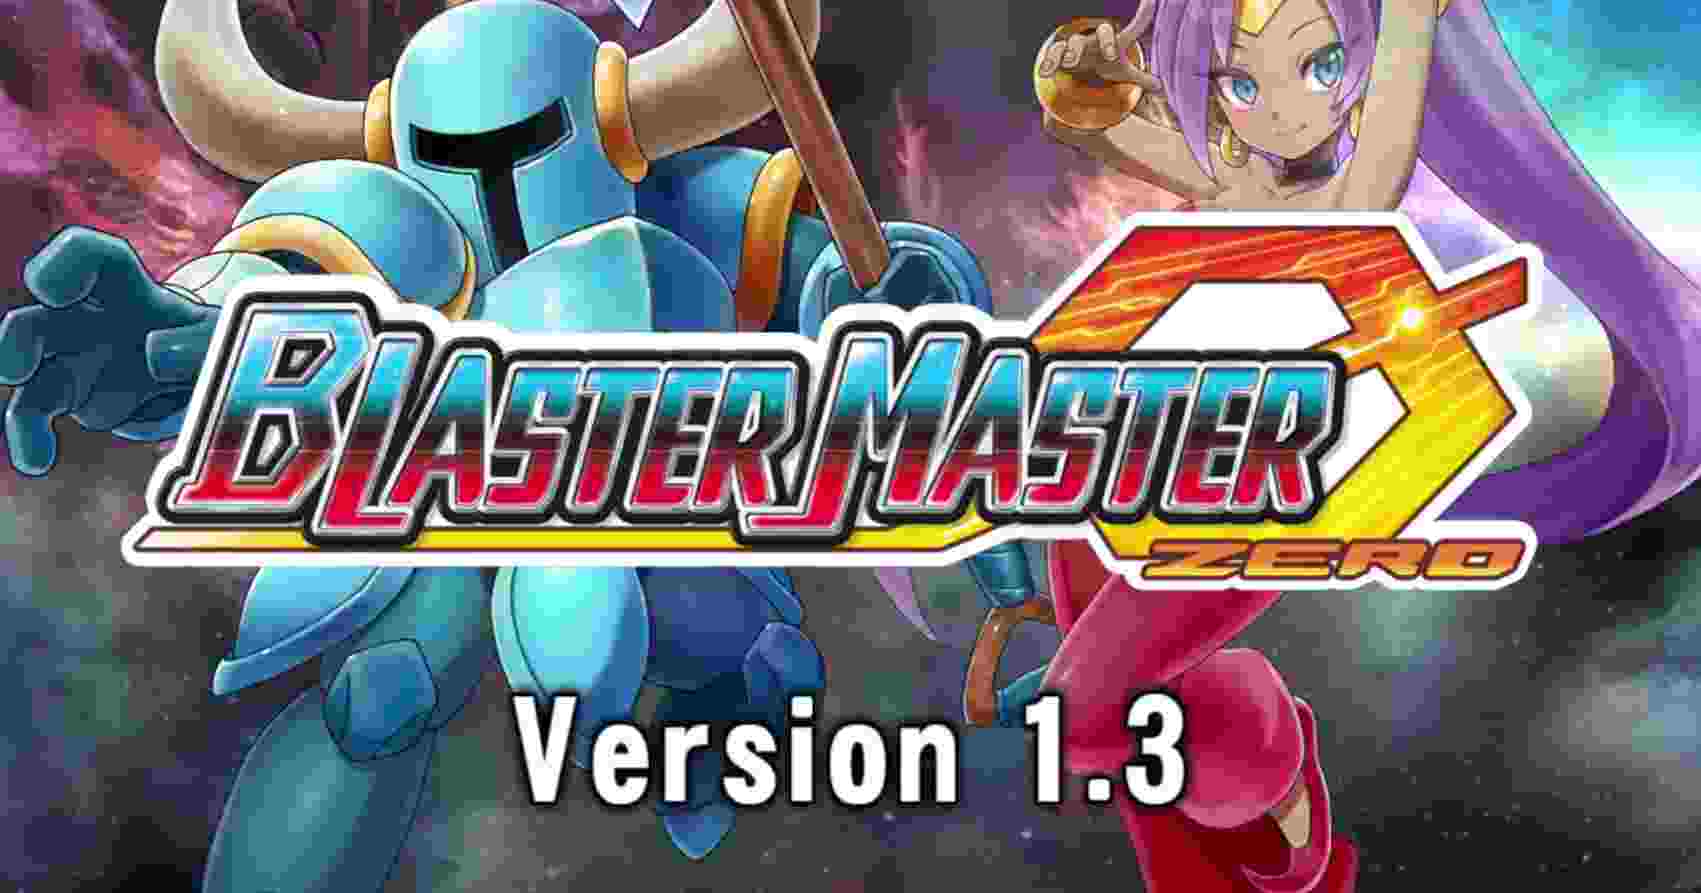 blaster master zero walkthrough